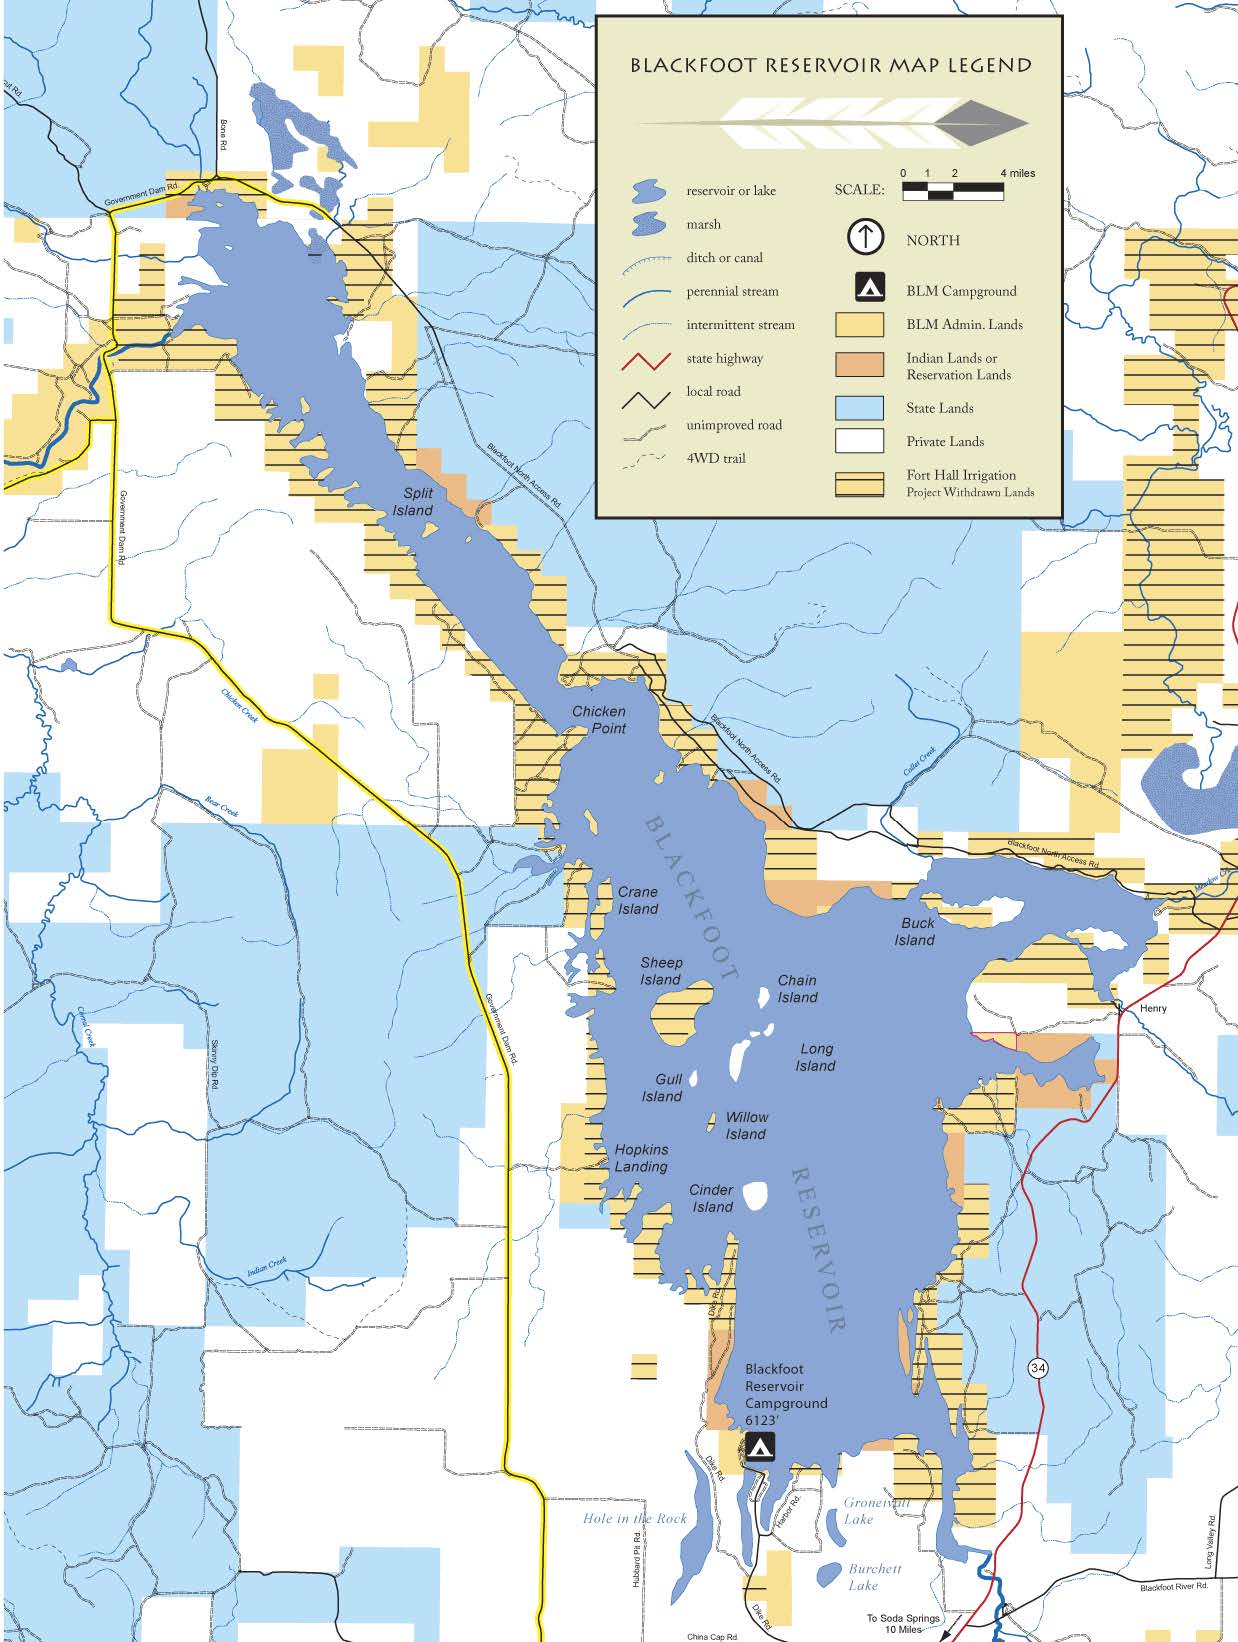 Public Room Media Center Idaho Blackfoot River Recreation Map Bureau Of Land Management 5920